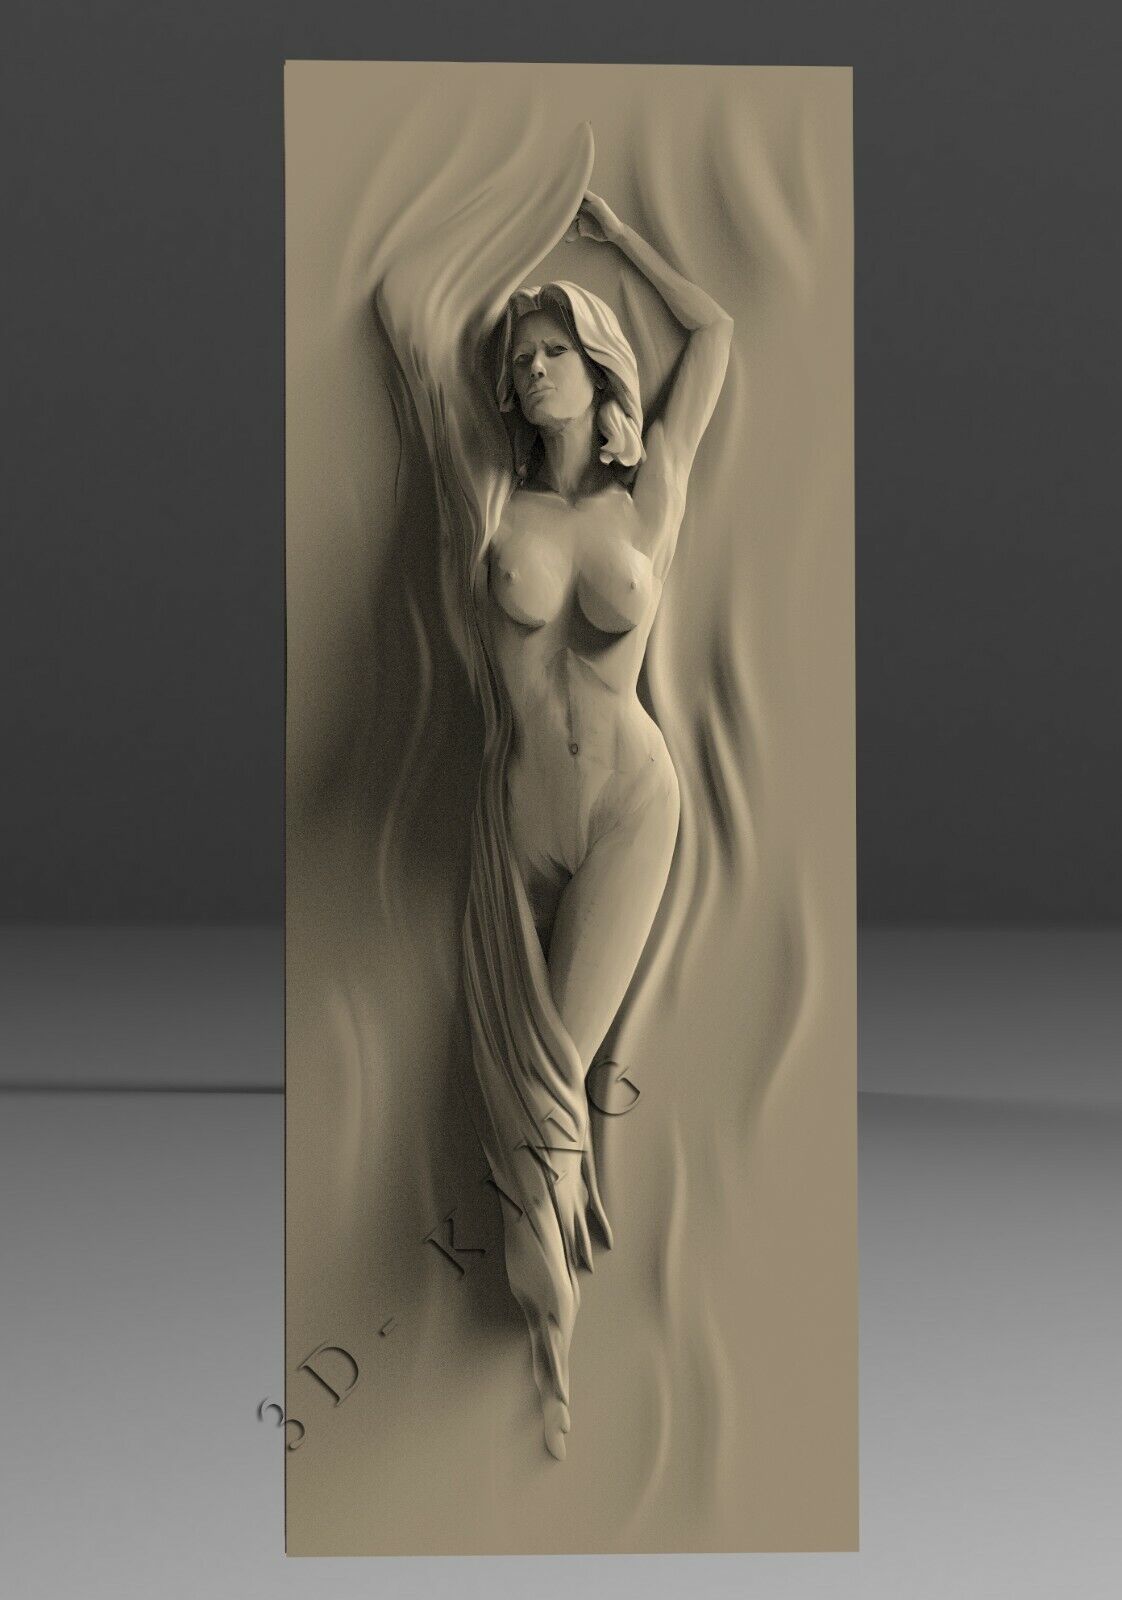 43 Pcs 3D STL Model NAKED WOMEN for CNC Router Aspire Artcam Engraver ASPIRE Без бренда - фотография #11